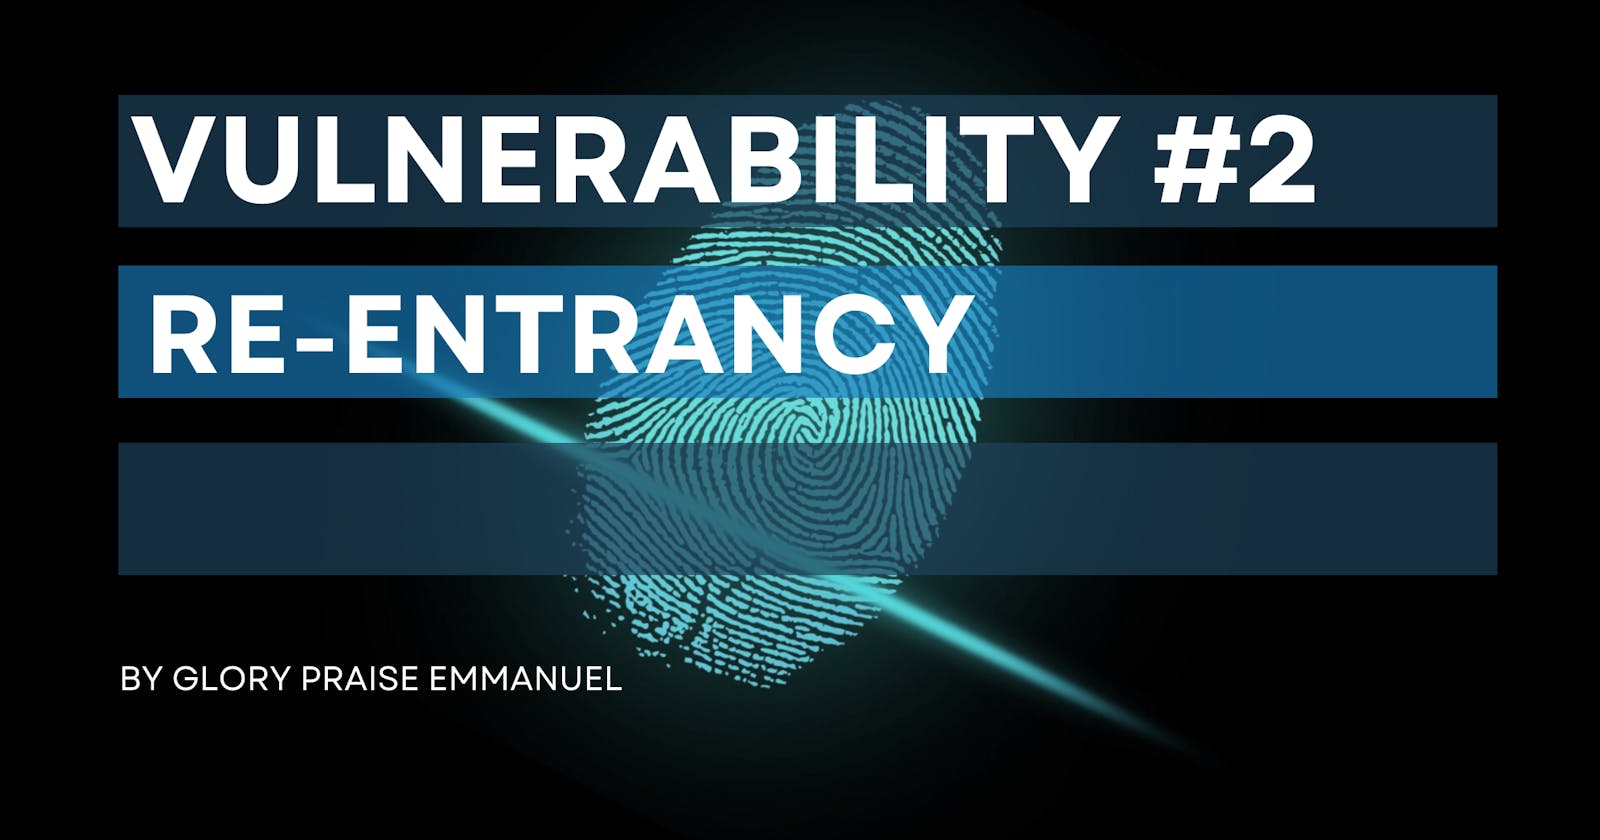 Vulnerability #2 - Reentrancy in Solidity